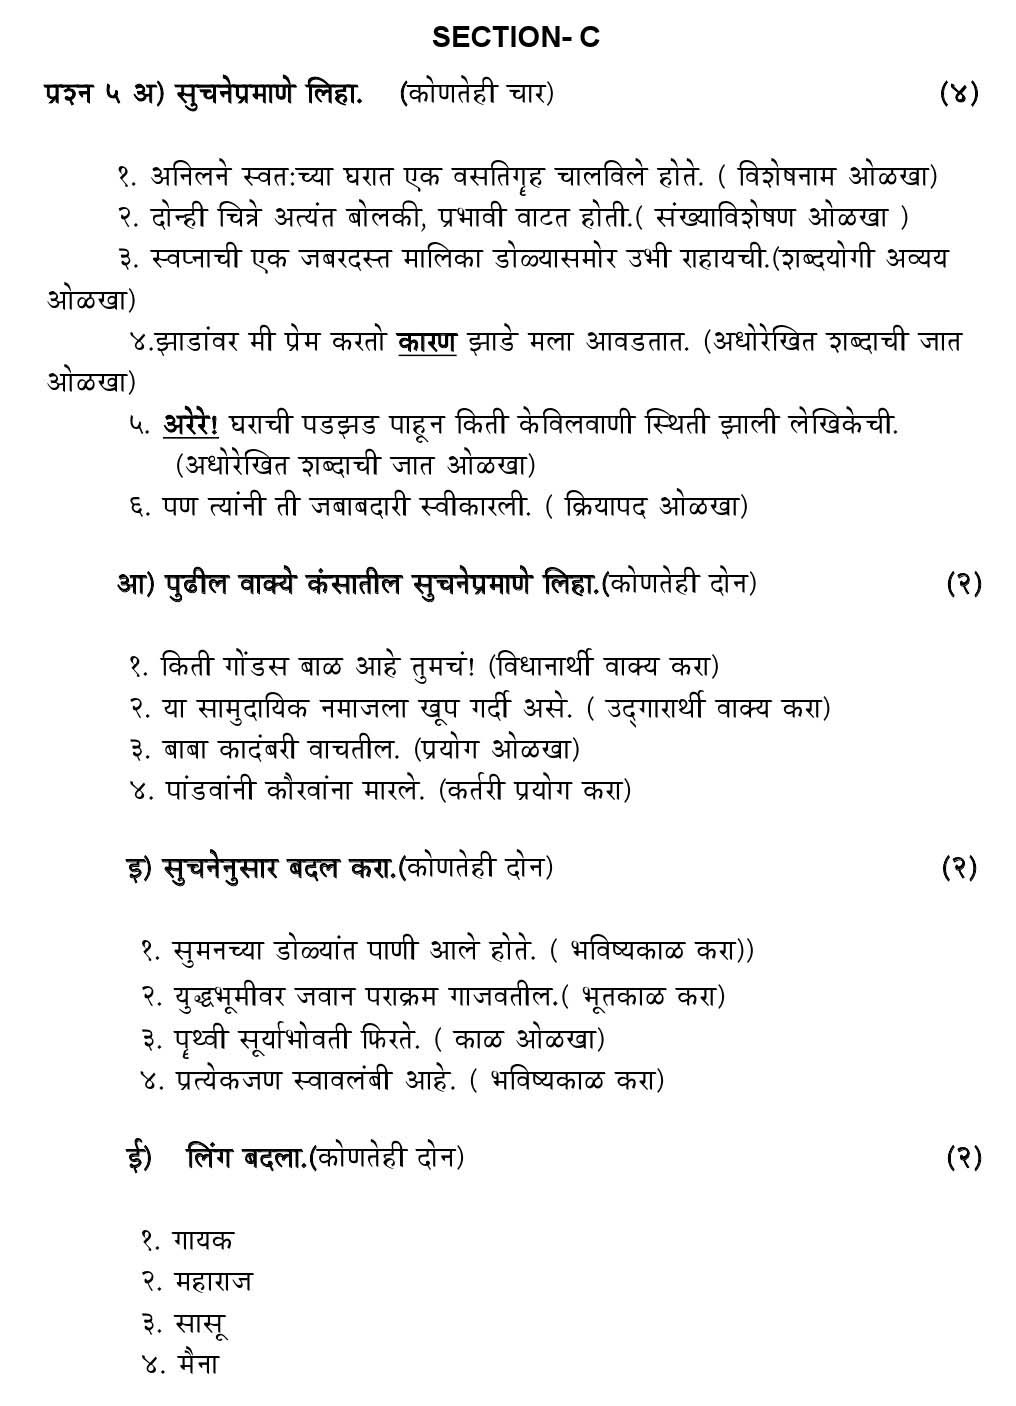 Marathi CBSE Class X Sample Question Paper 2018-19 - Image 4